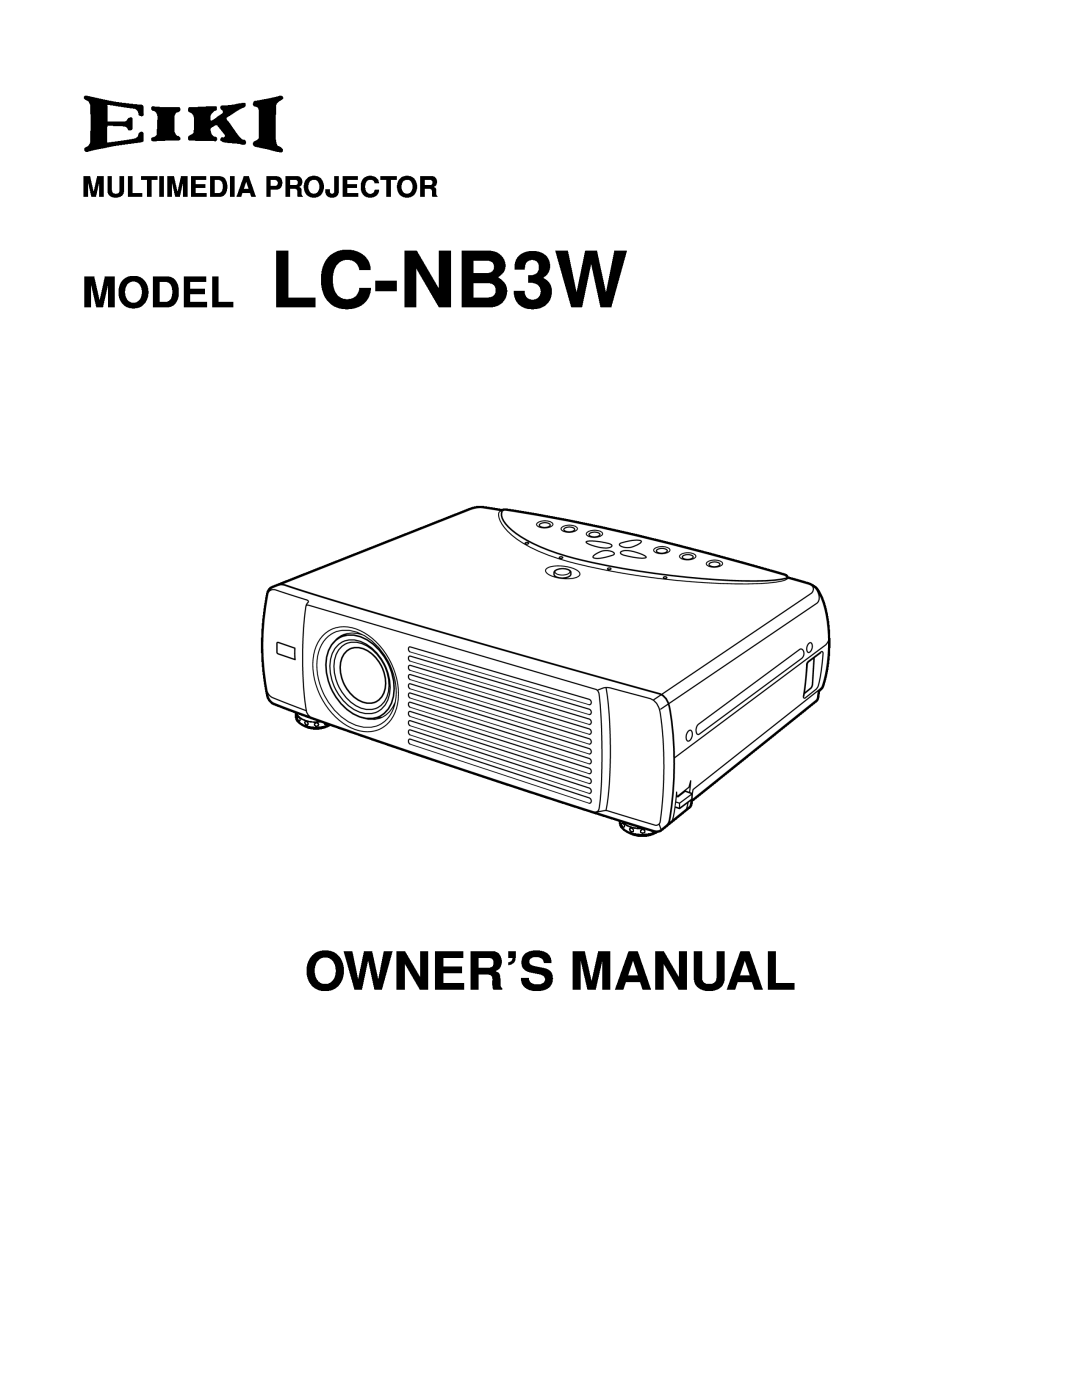 Eiki owner manual Multimedia Projector, MODEL LC-NB3W 